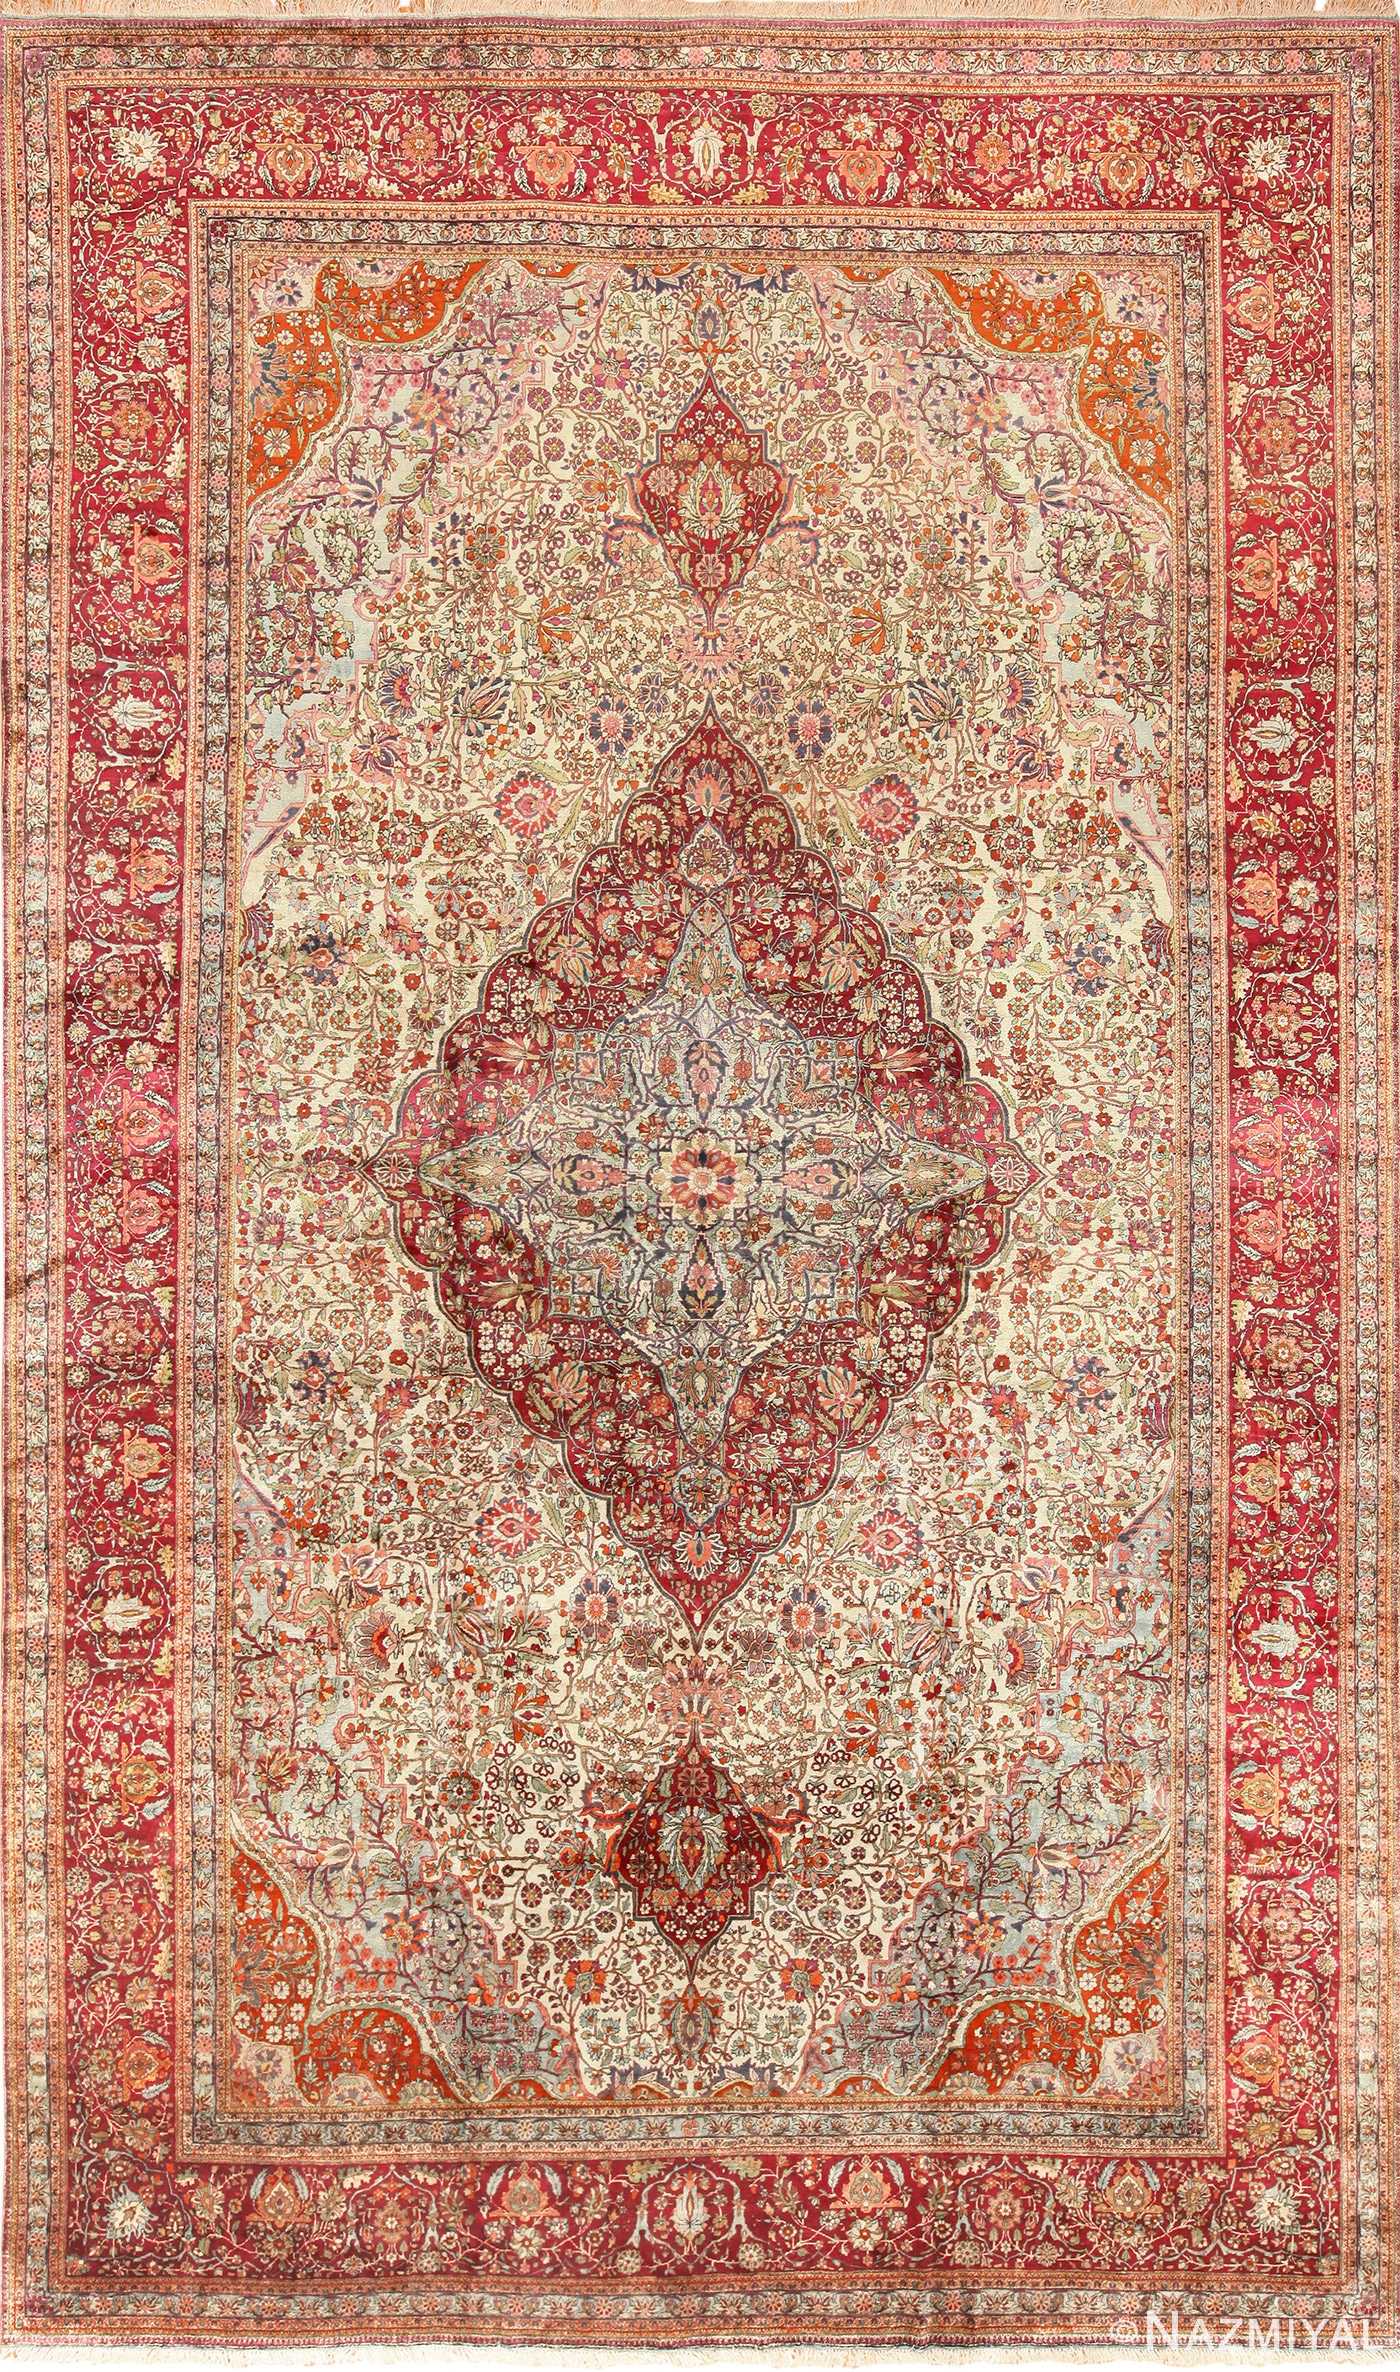 Beautiful Silk Mohtasham Kashan Persian Rug 49329 by Nazmiyal